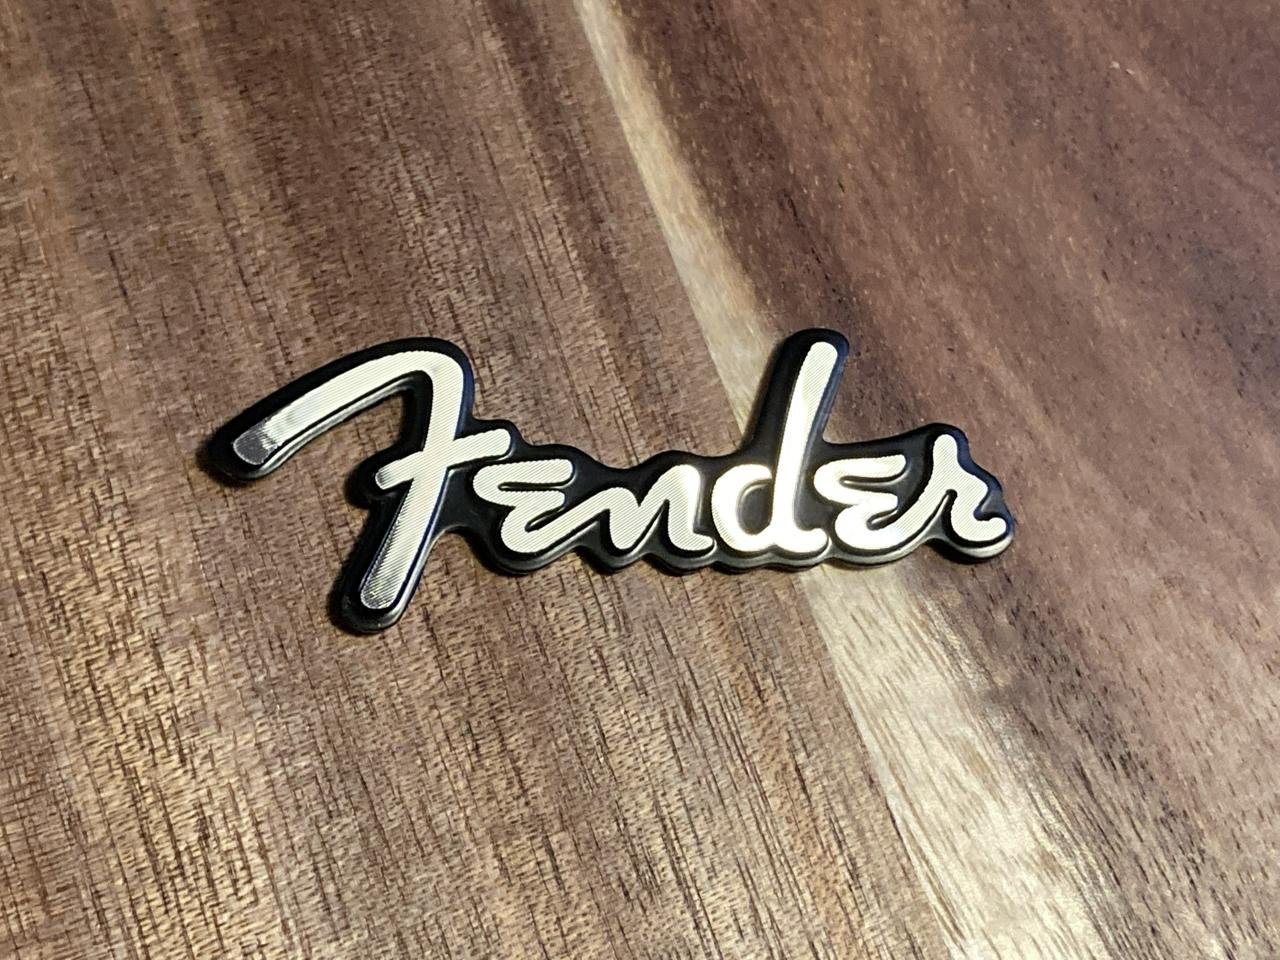 Fender emblem